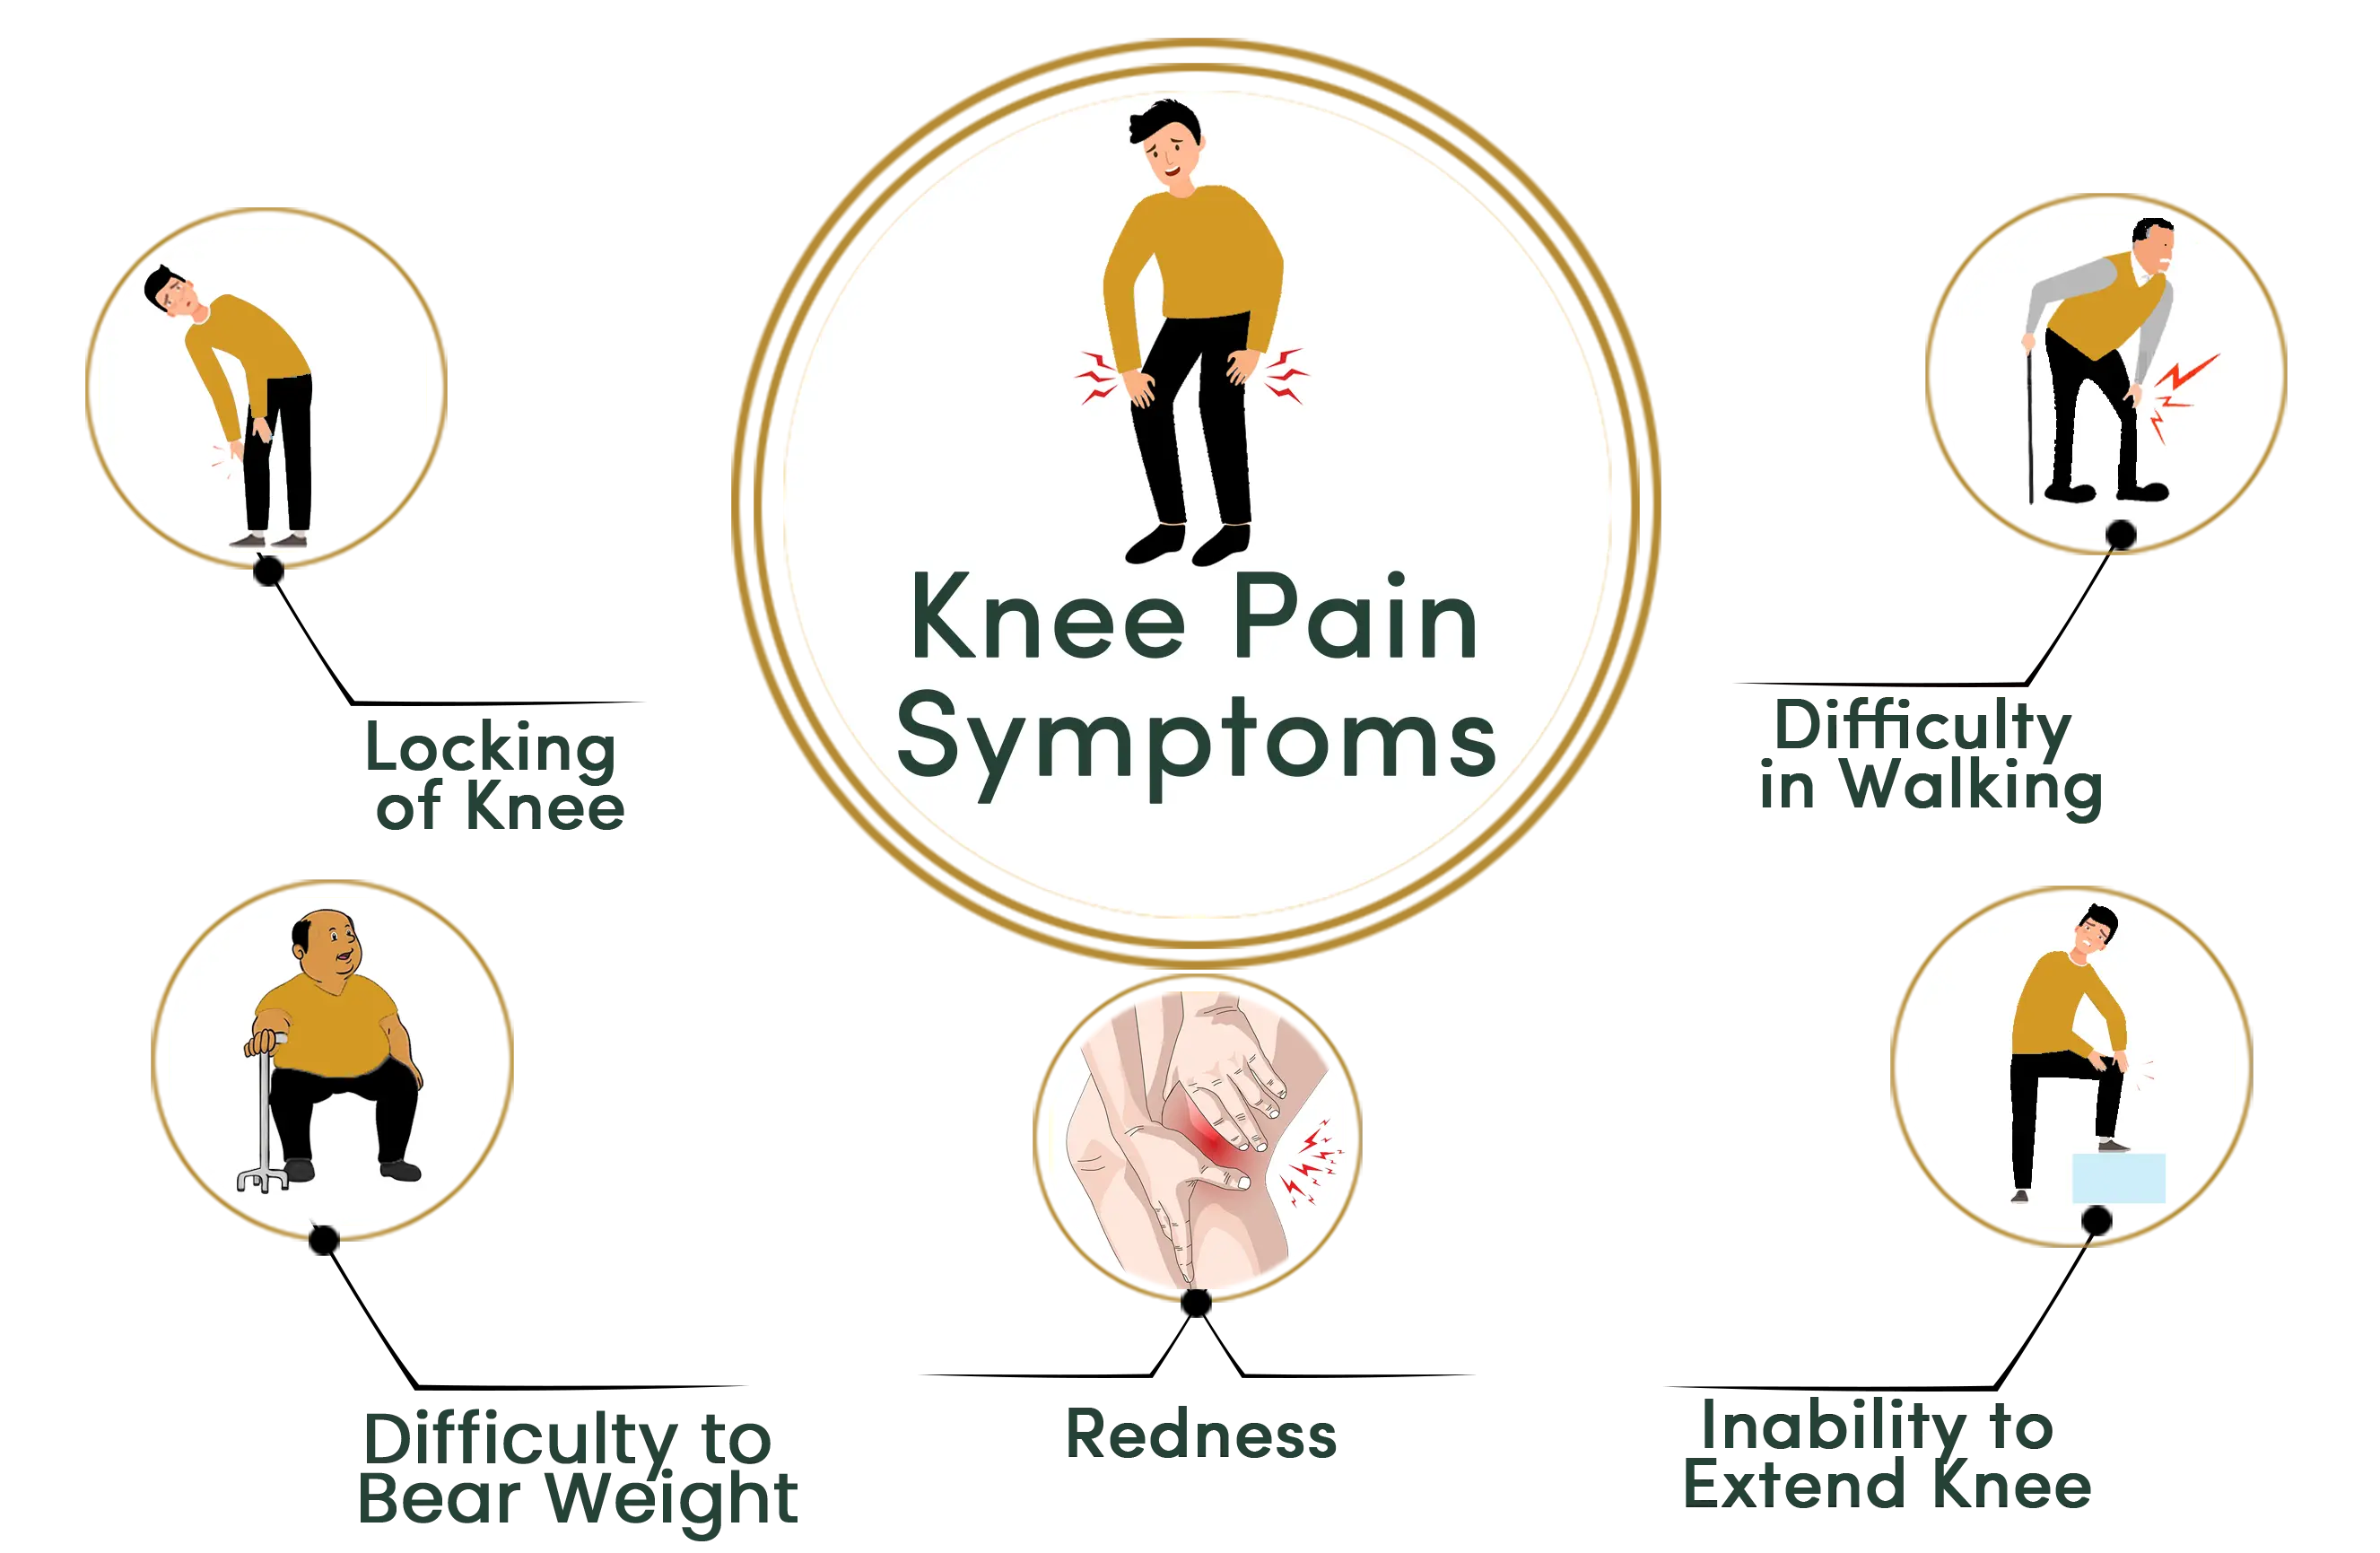 Knee pain symptoms